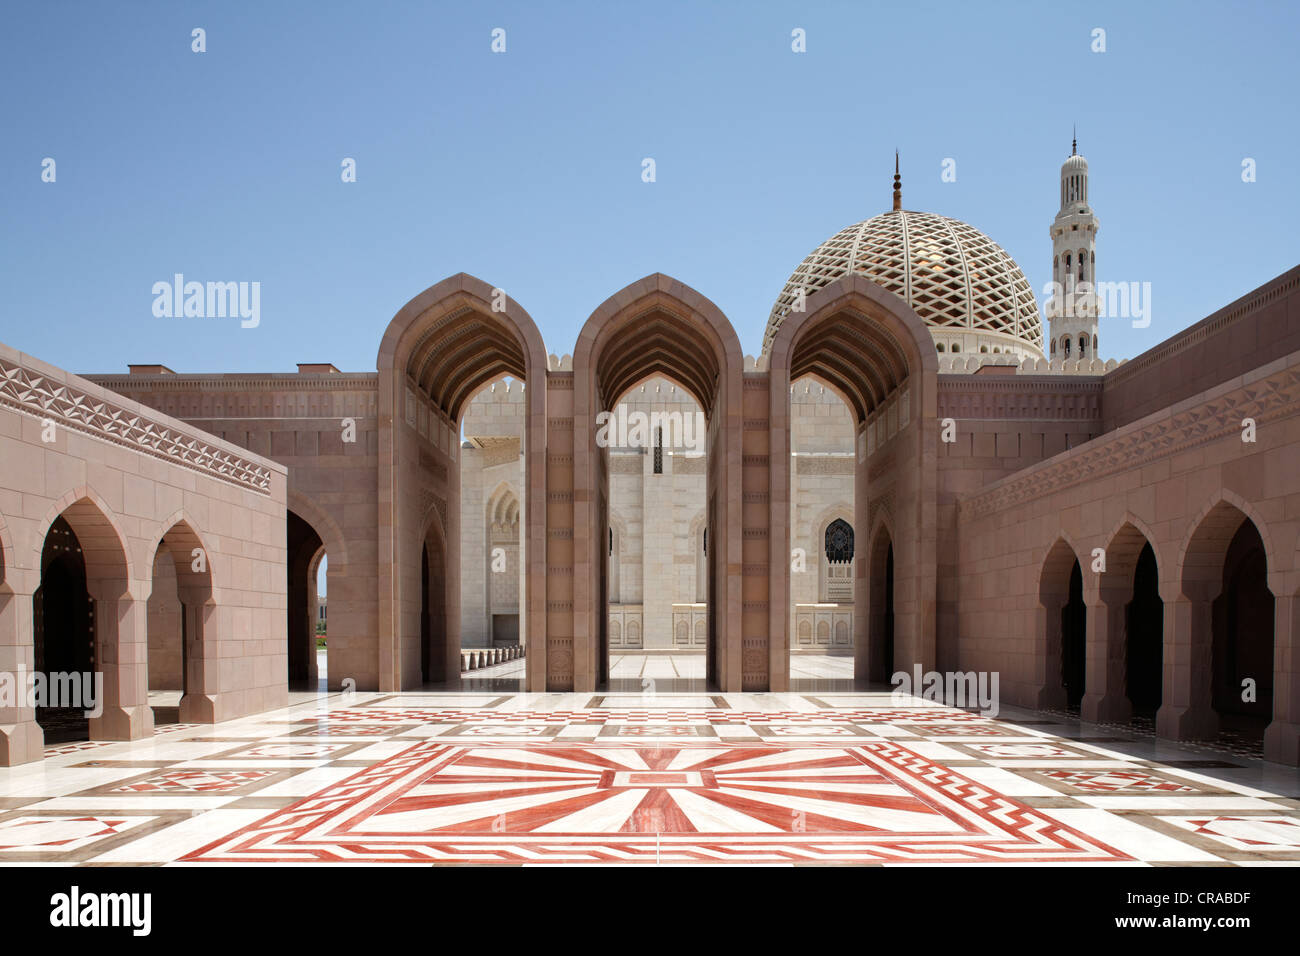 Quadrat mit Spitzbogen, Ornamente, Tor, Minarett, Kuppel, Sultan Qaboos Grand Mosque, Hauptstadt Muscat, Sultanat von Oman Stockfoto